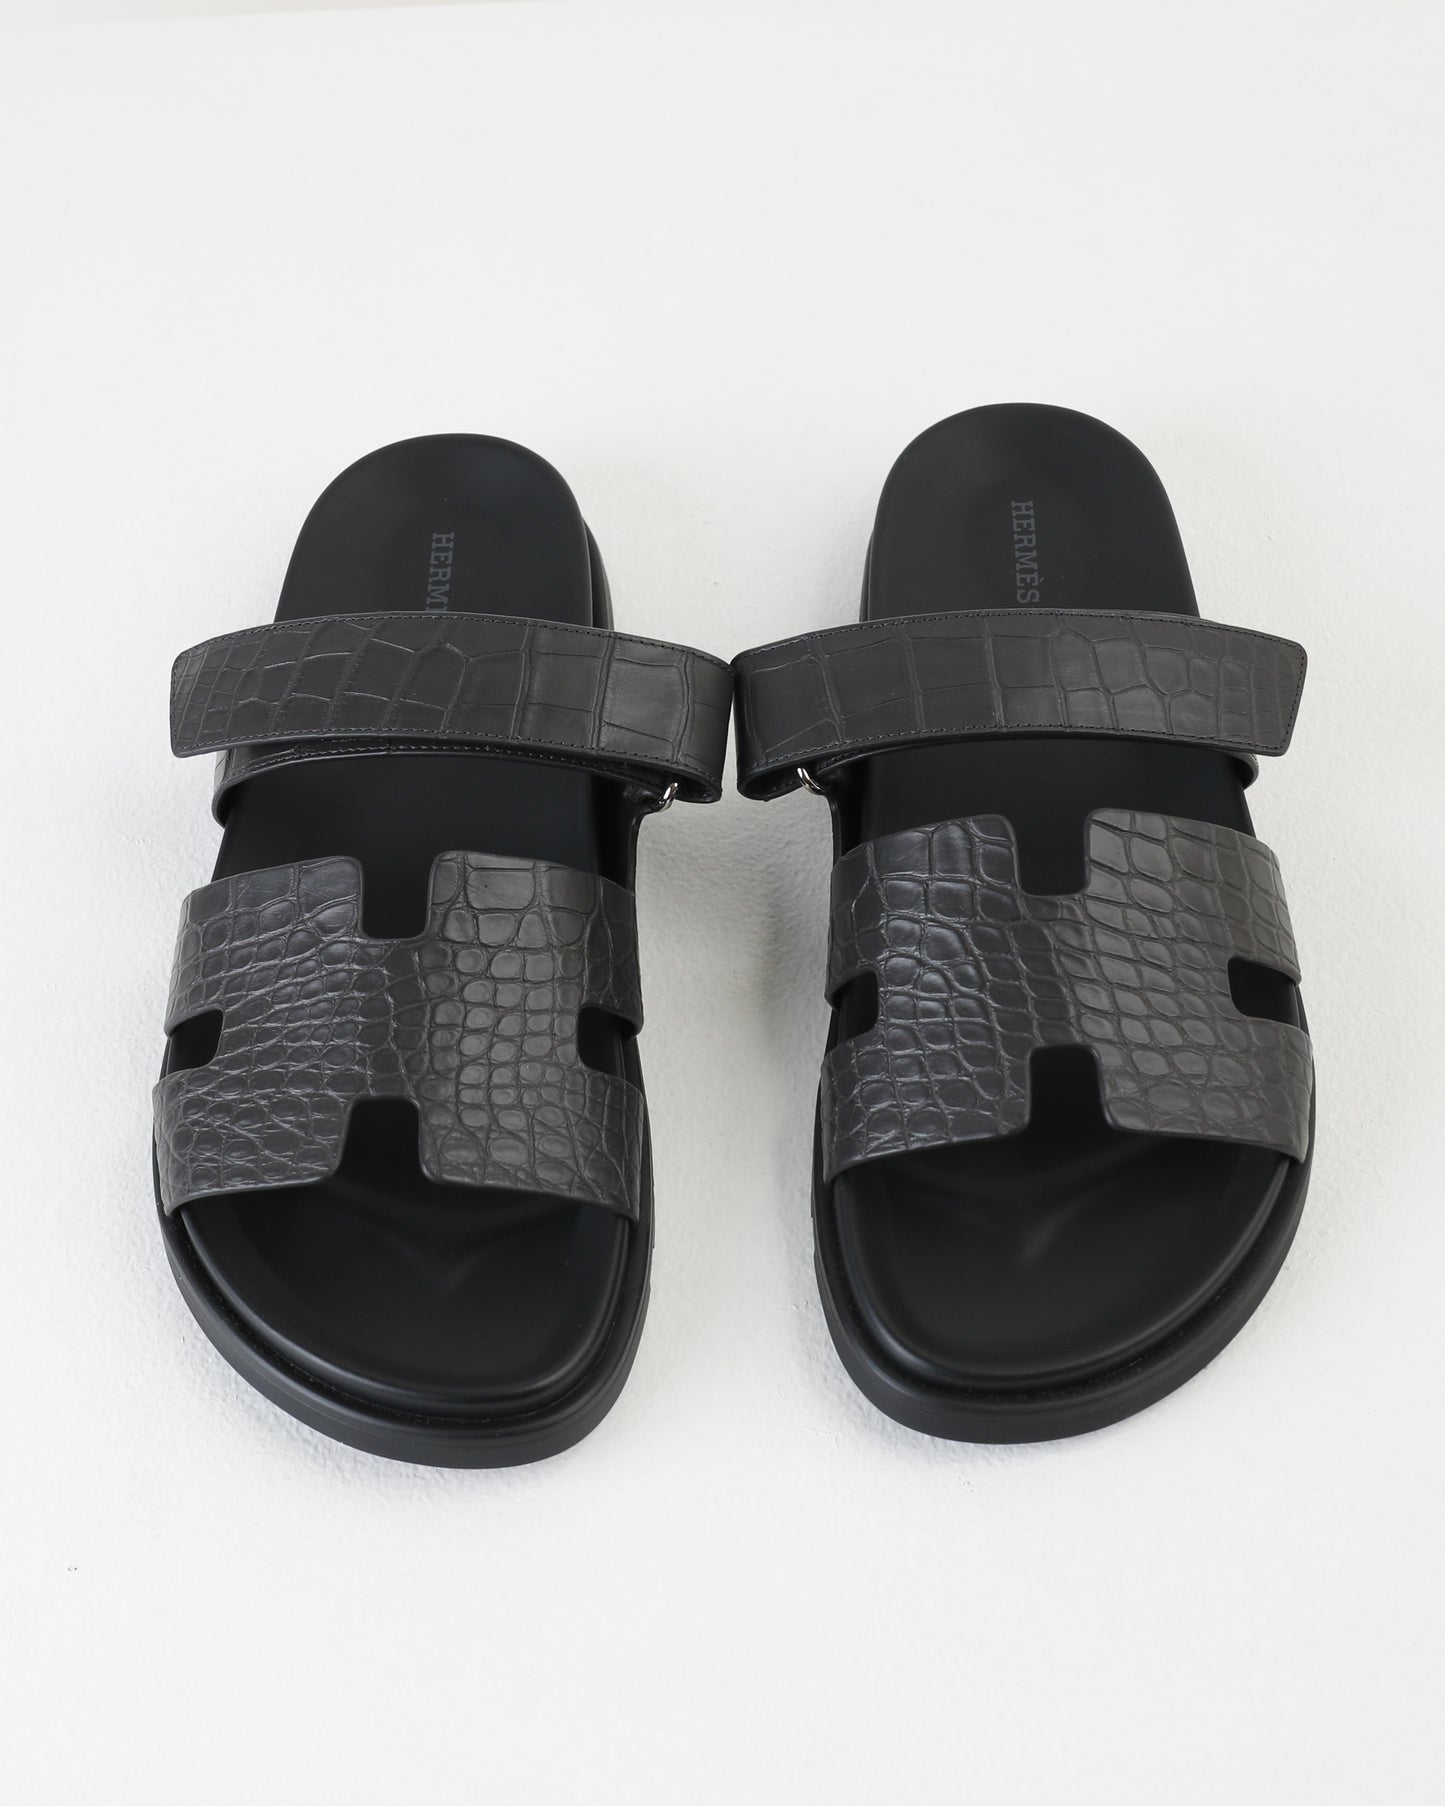 Chypre Sandal in Black Crocodile Leather